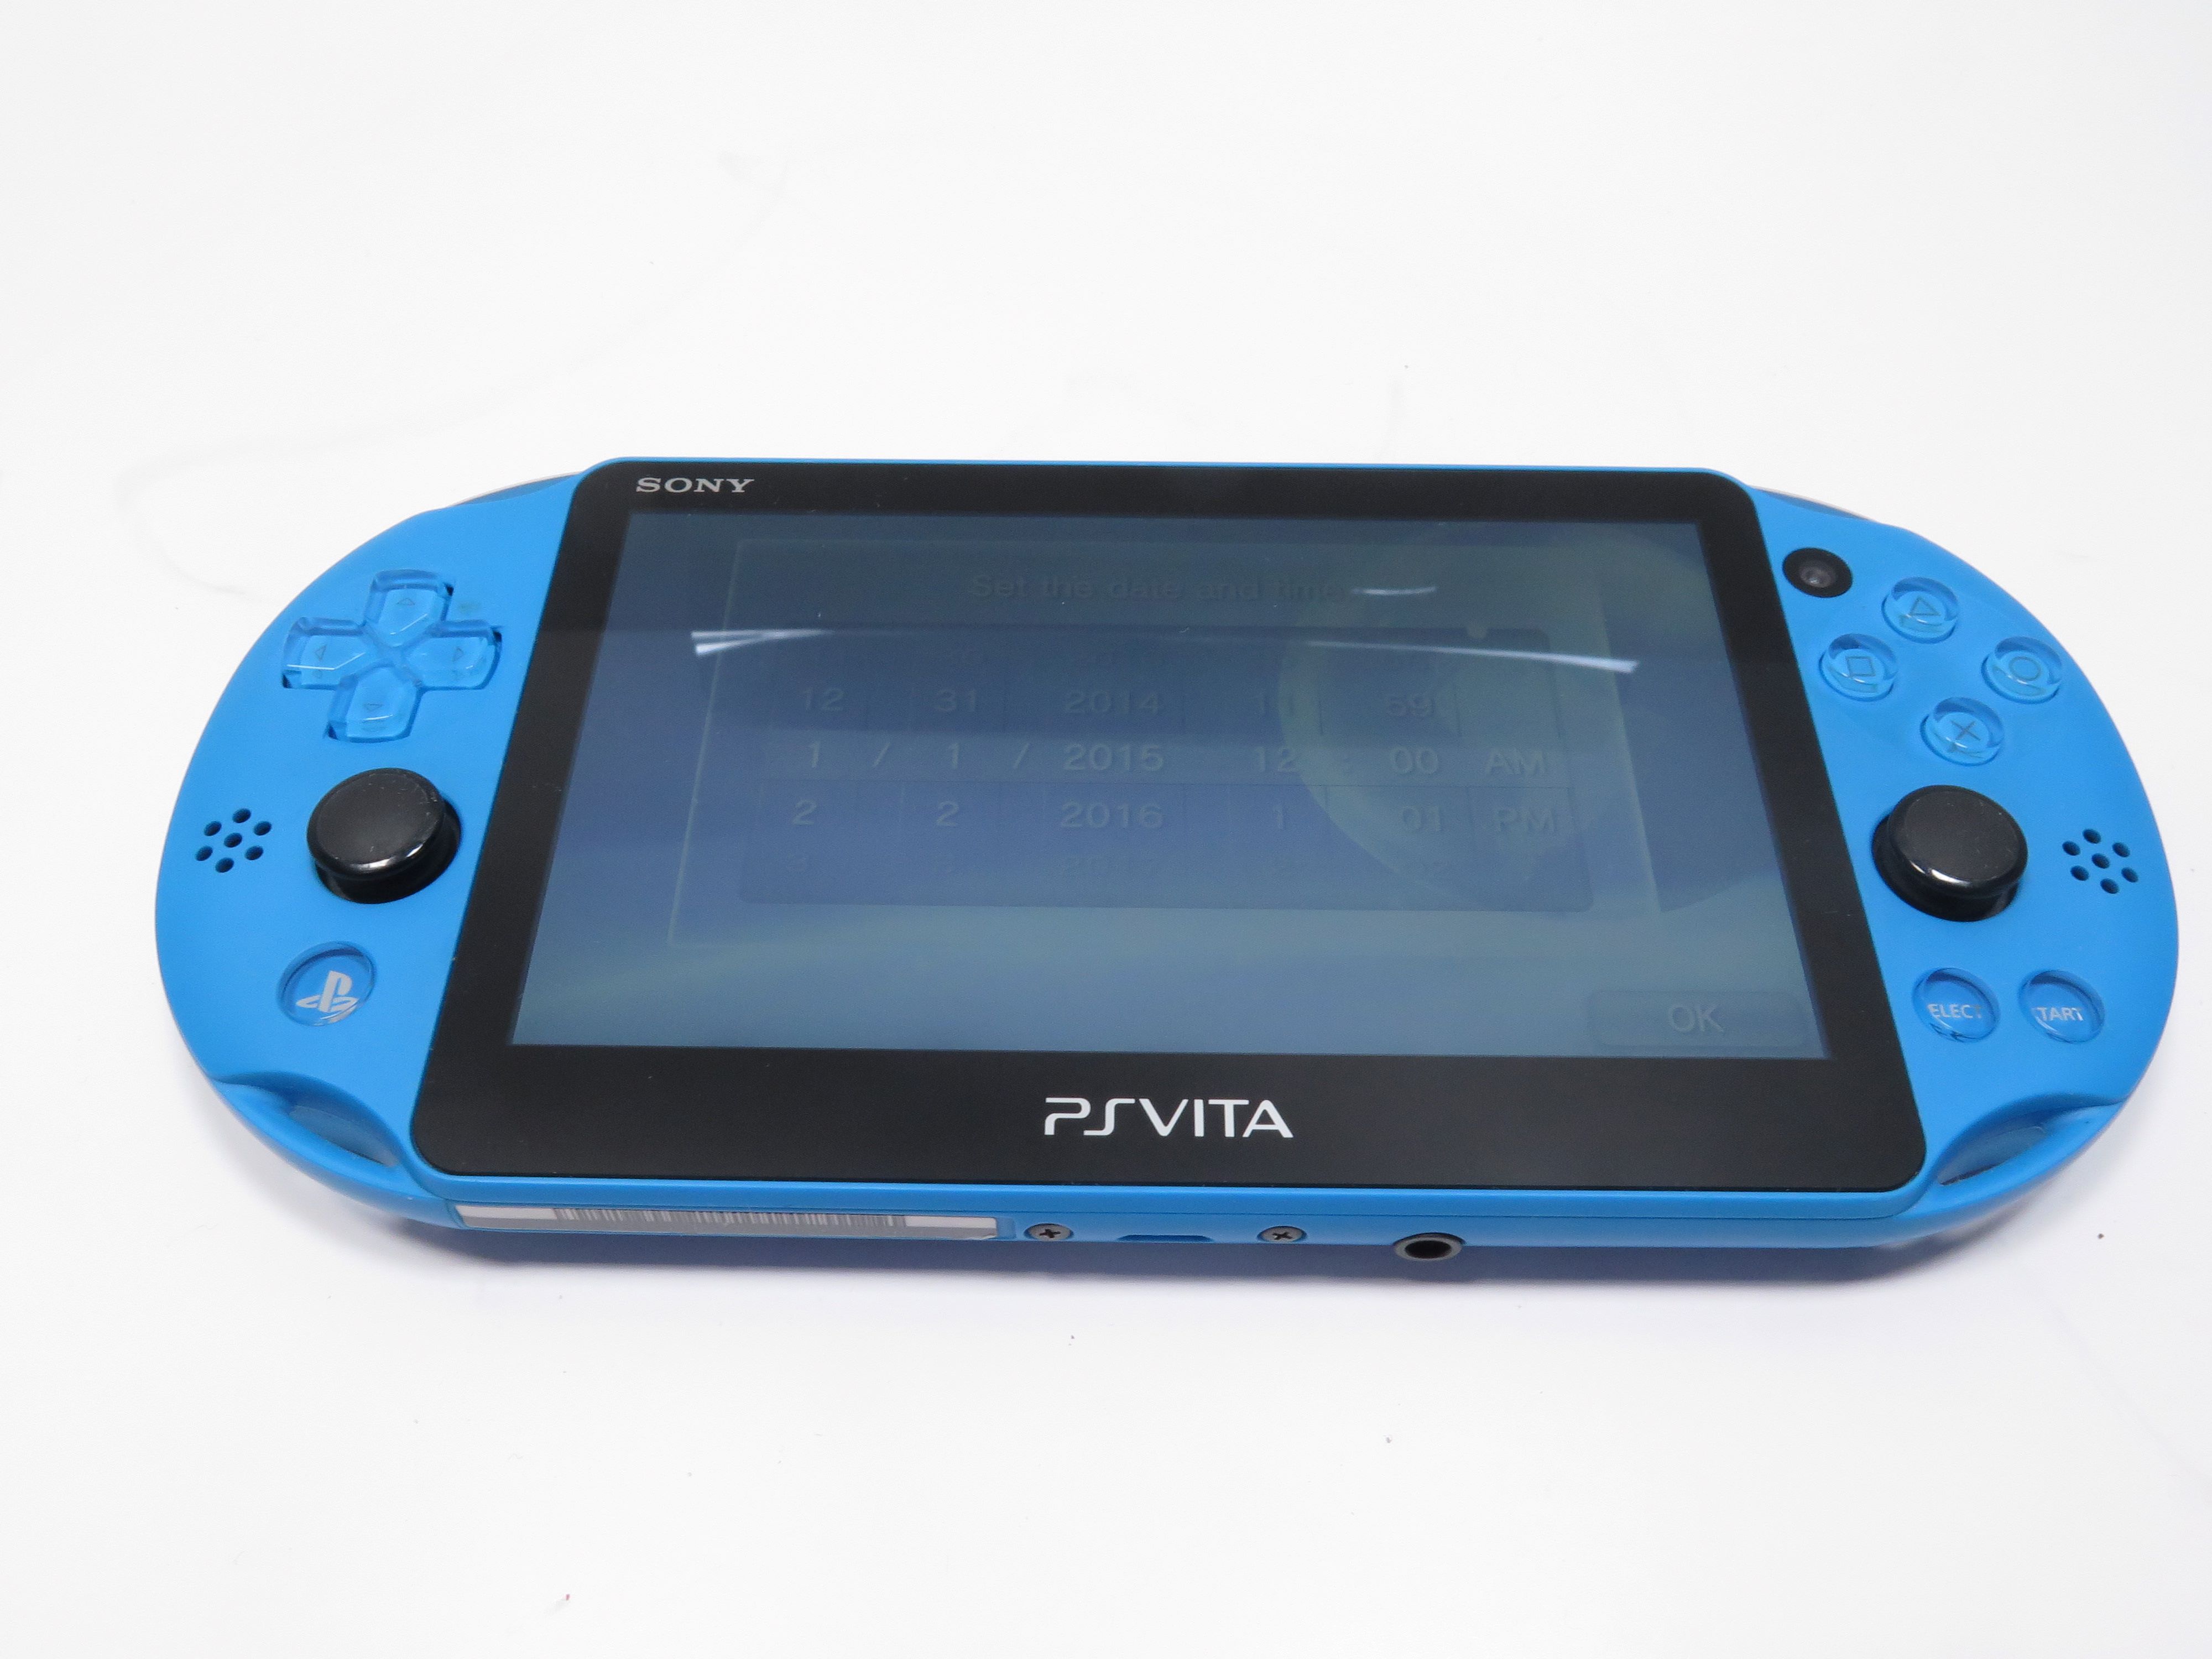 Sony PCH-2000 PlayStation Vita Handheld Video Game Console - Aqua